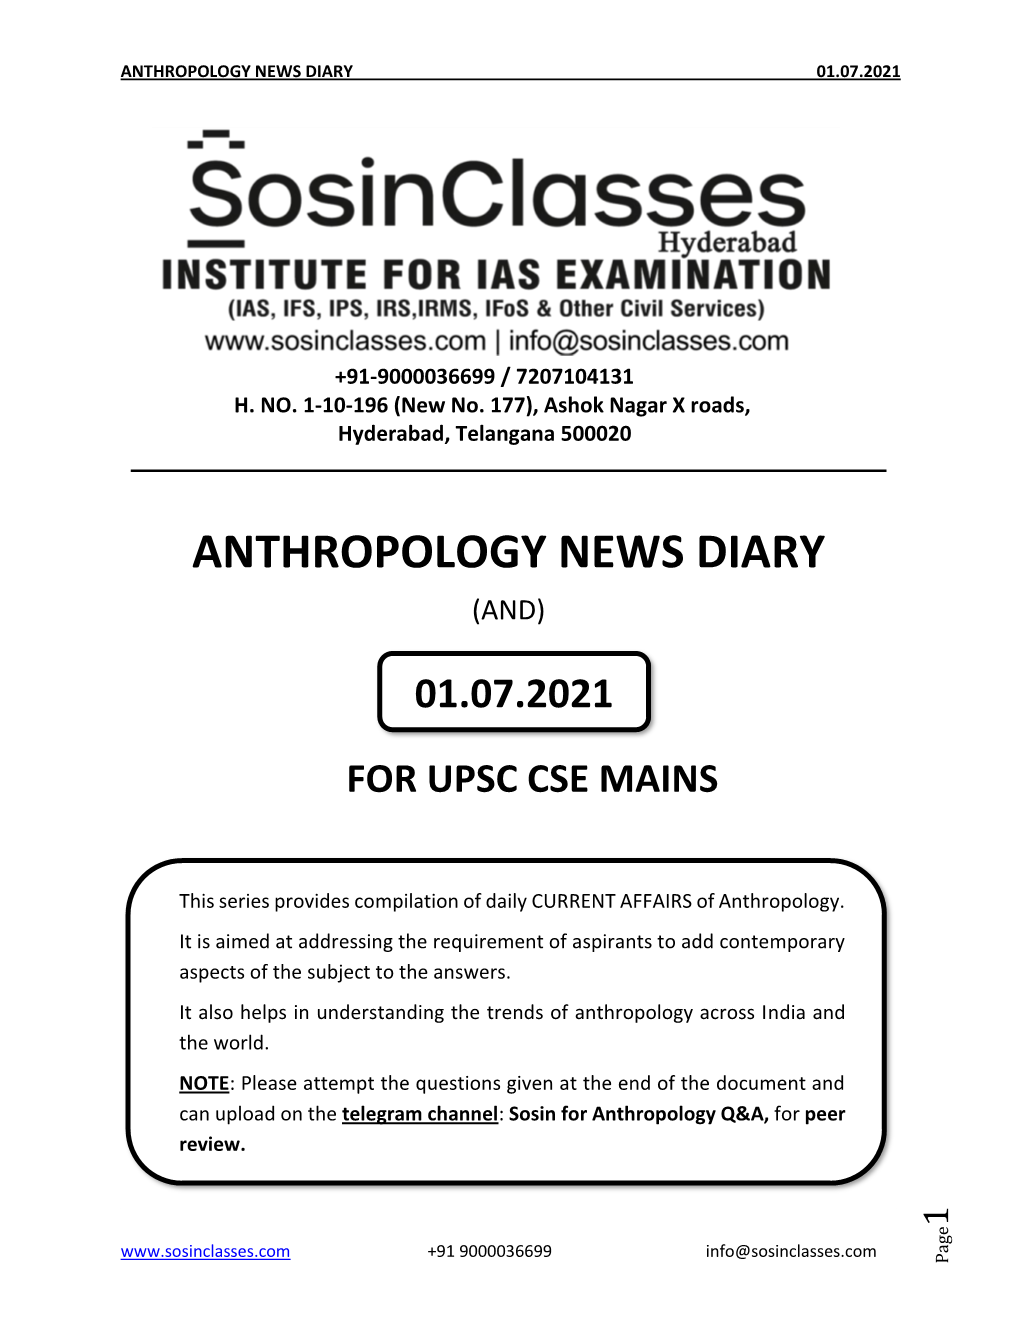 Anthropology News Diary 01.07.2021